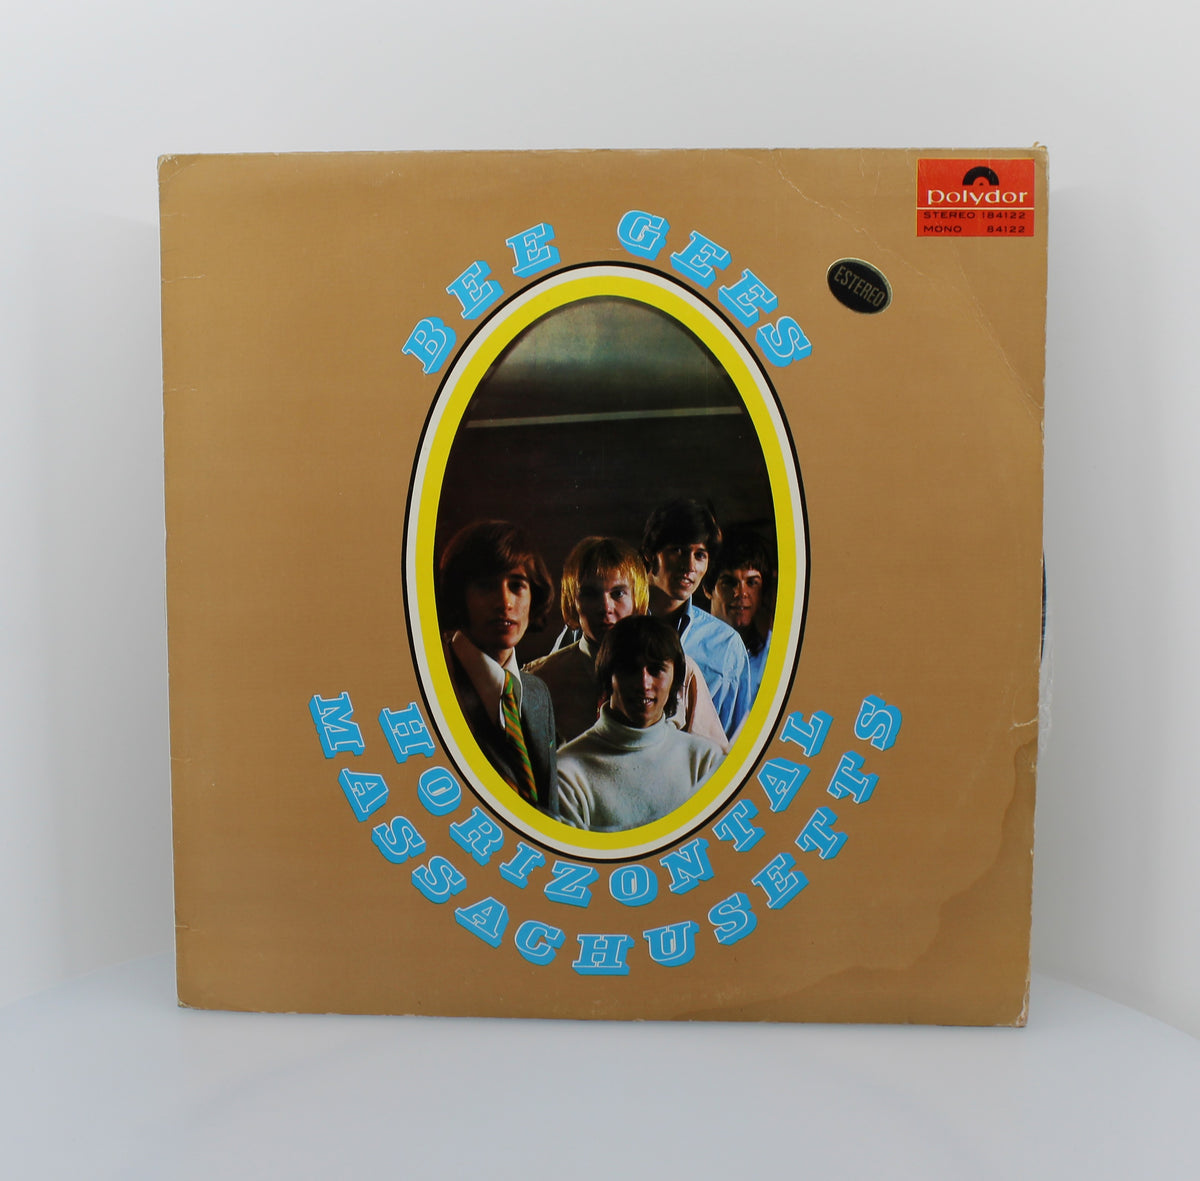 Bee Gees – Horizontal Massachusetts, Vinyl, LP, Album, Stereo!, Colombia 1968